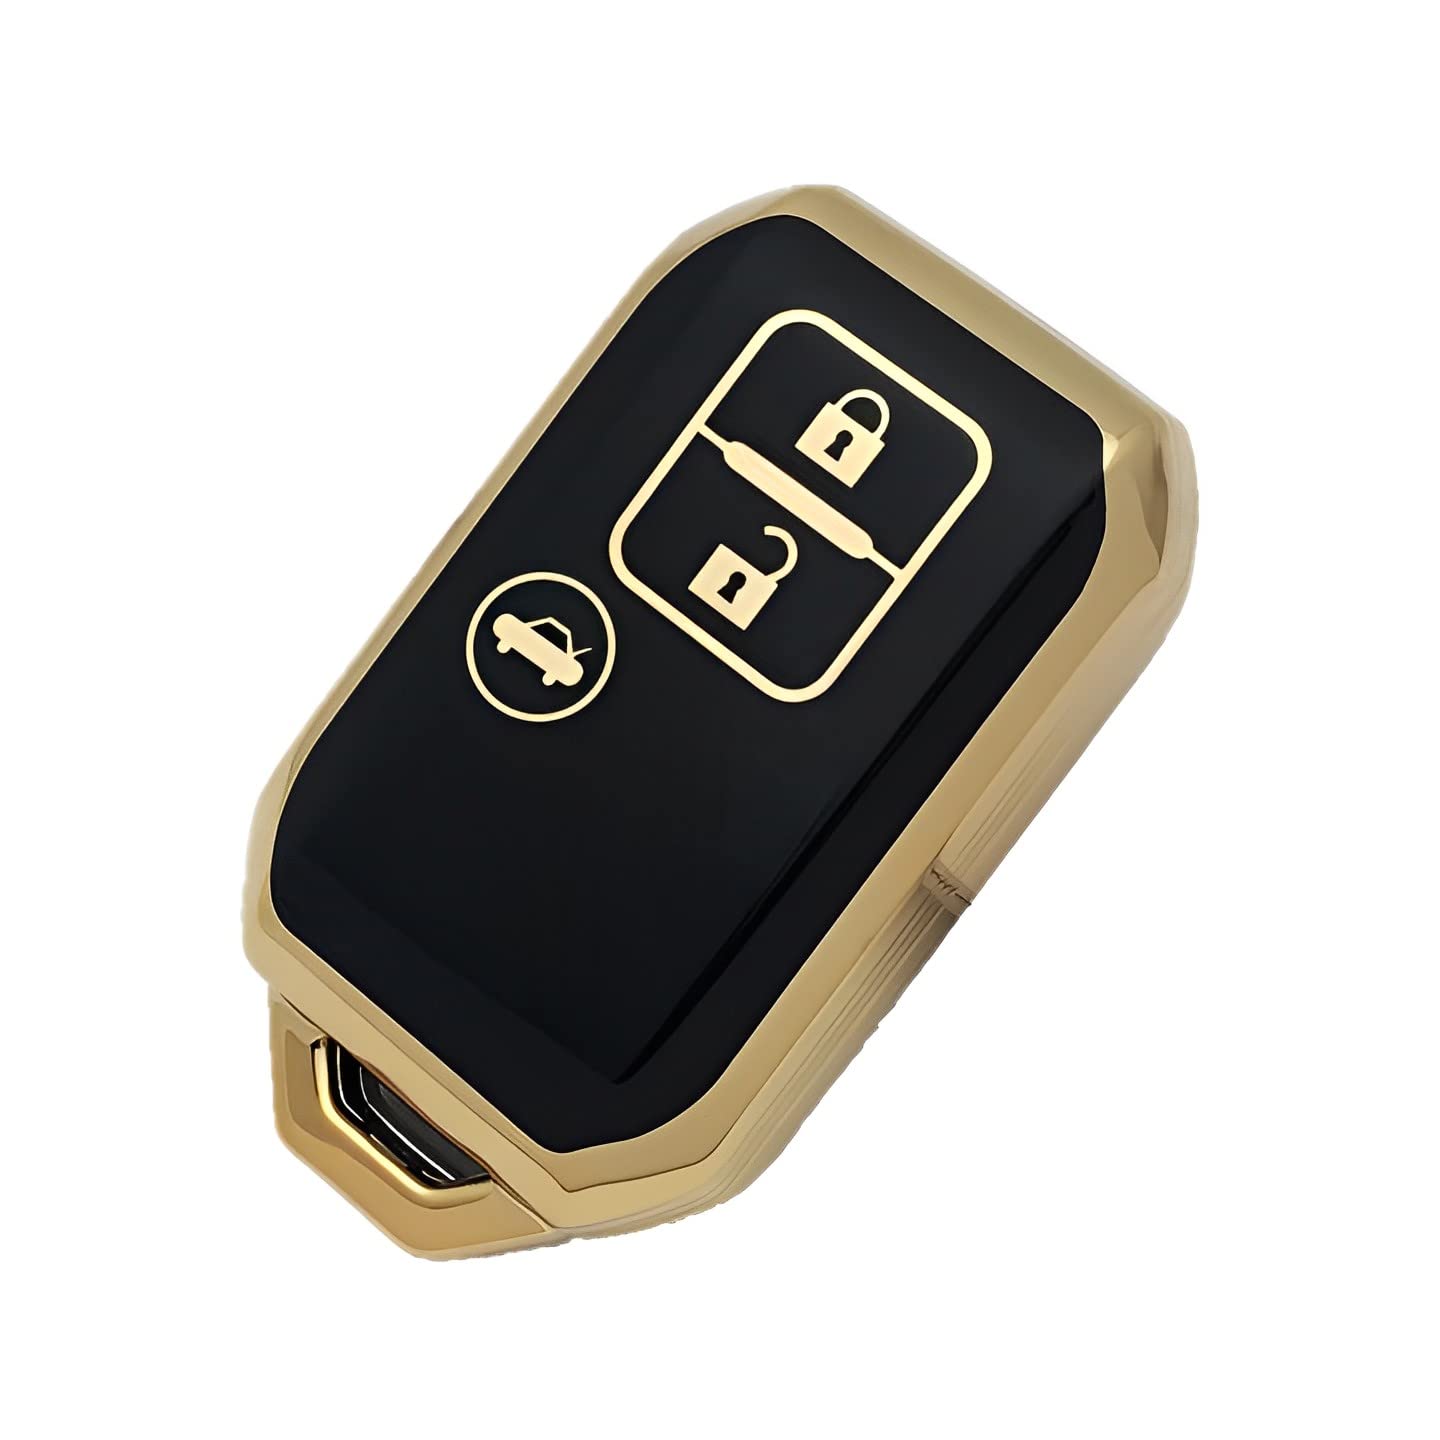 TPU Gold Car Key Cover Compatible for Maruti Suzuki Swift, Dzire, Baleno, Ertiga 3 Button Smart Key Cover (Pack of 1, Black)